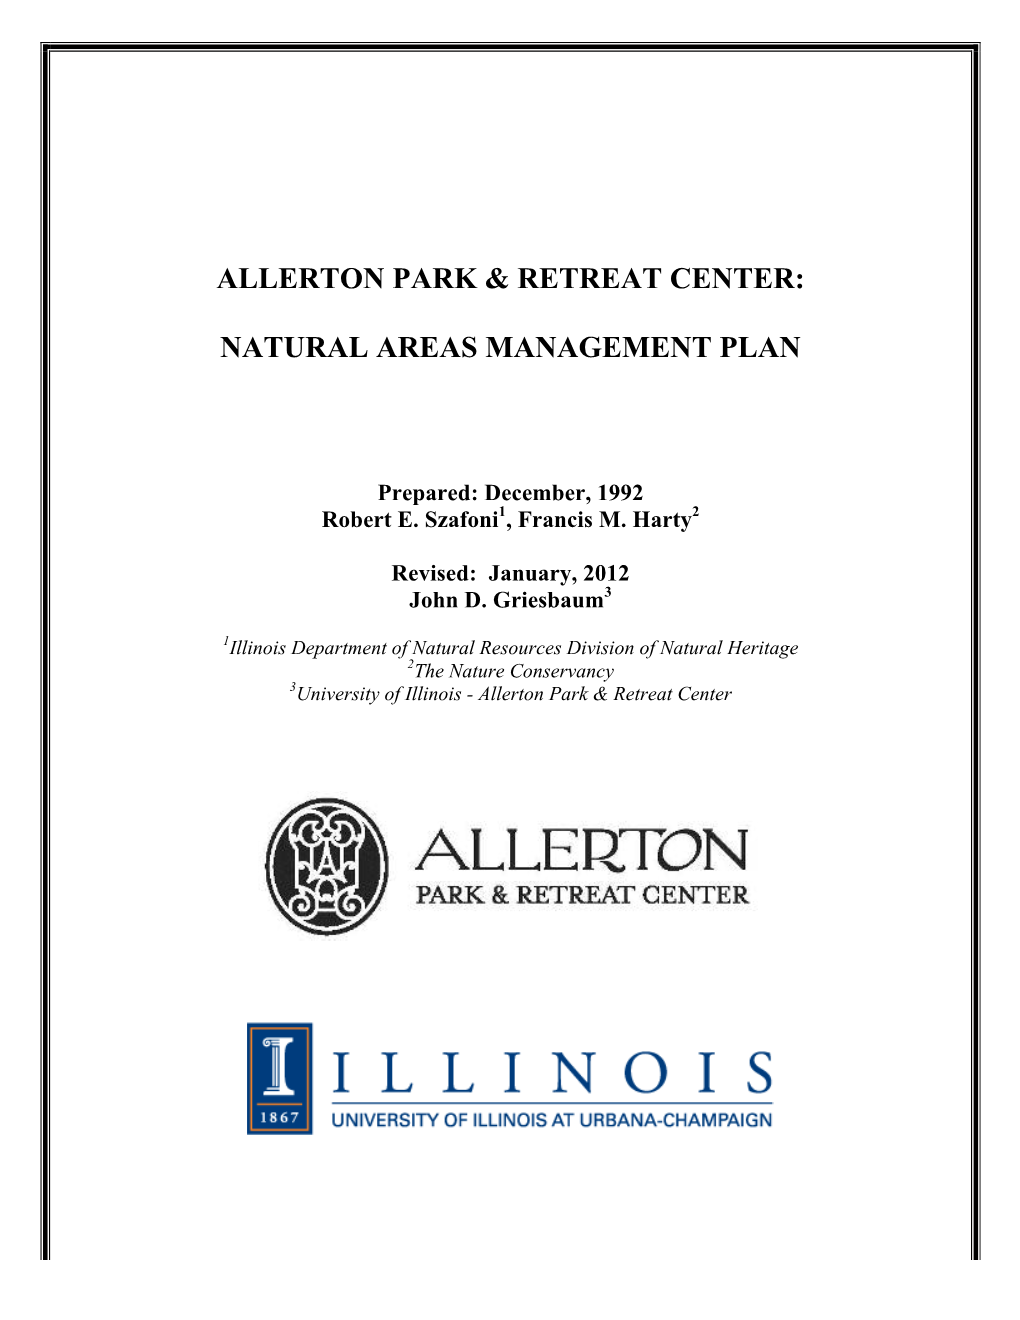 Natural Areas Management Plan